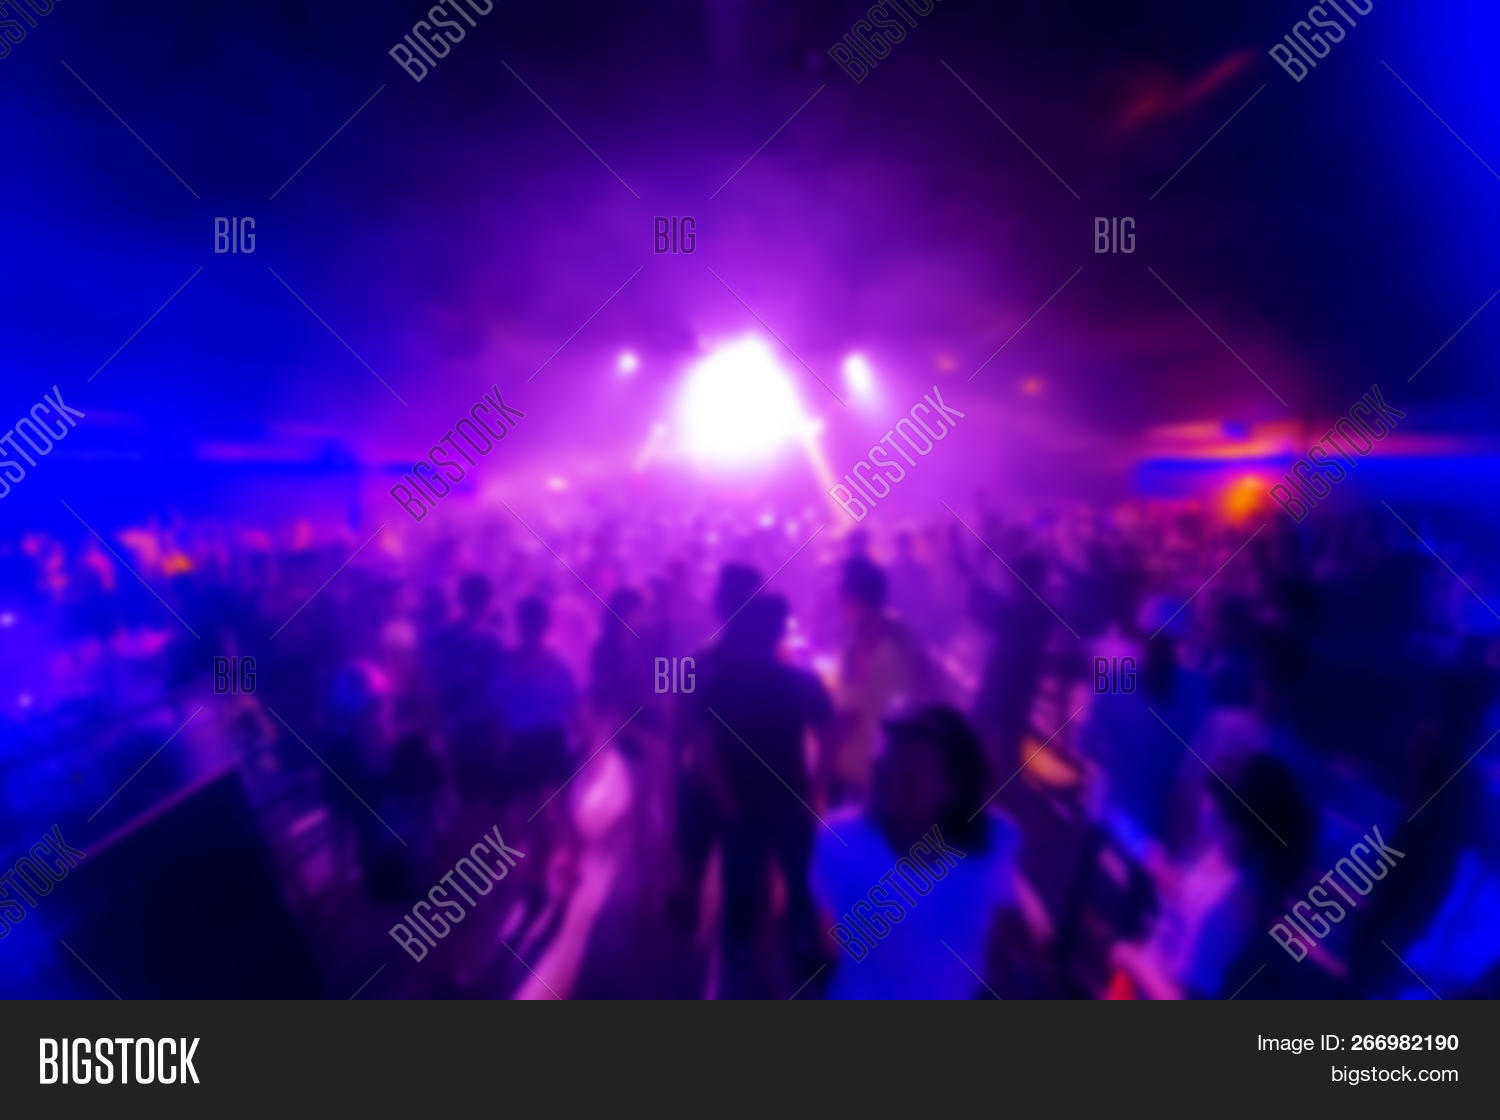 Blurred Night Club Image Photo Free Trial Bigstock